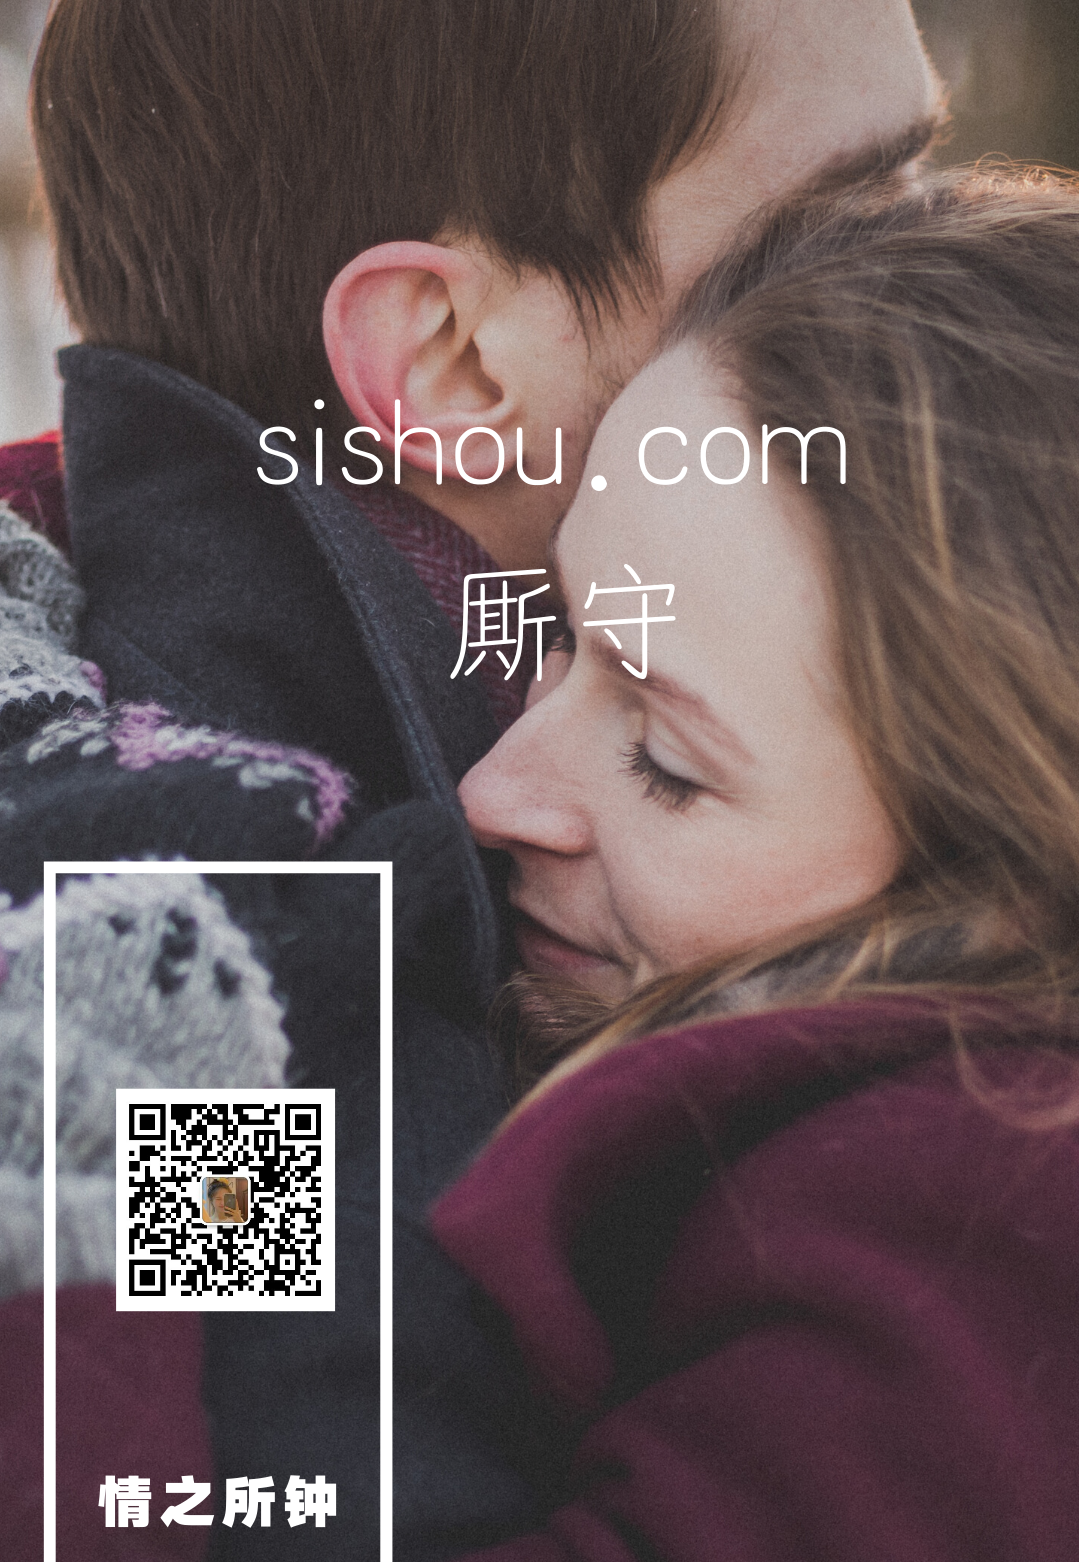 sishou.com